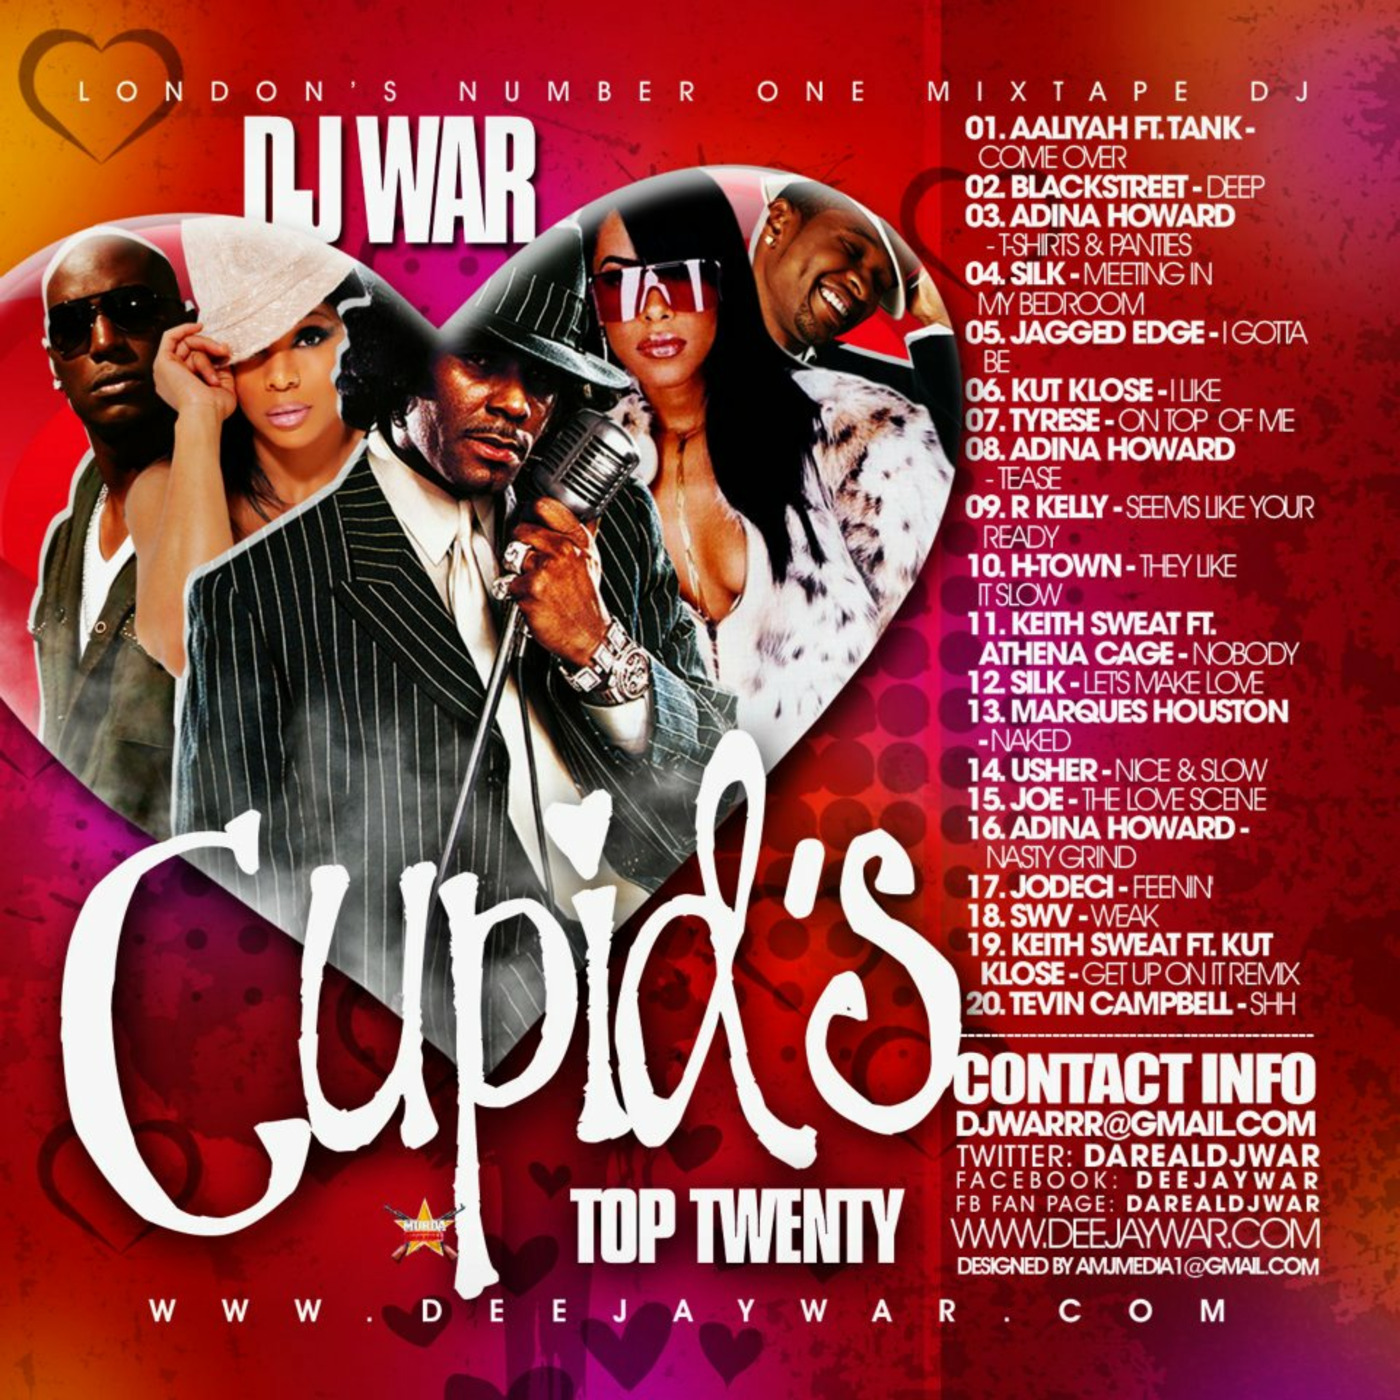 DJ War - Cupid's Top Twenty #1 Valentines Mix, Slowjams